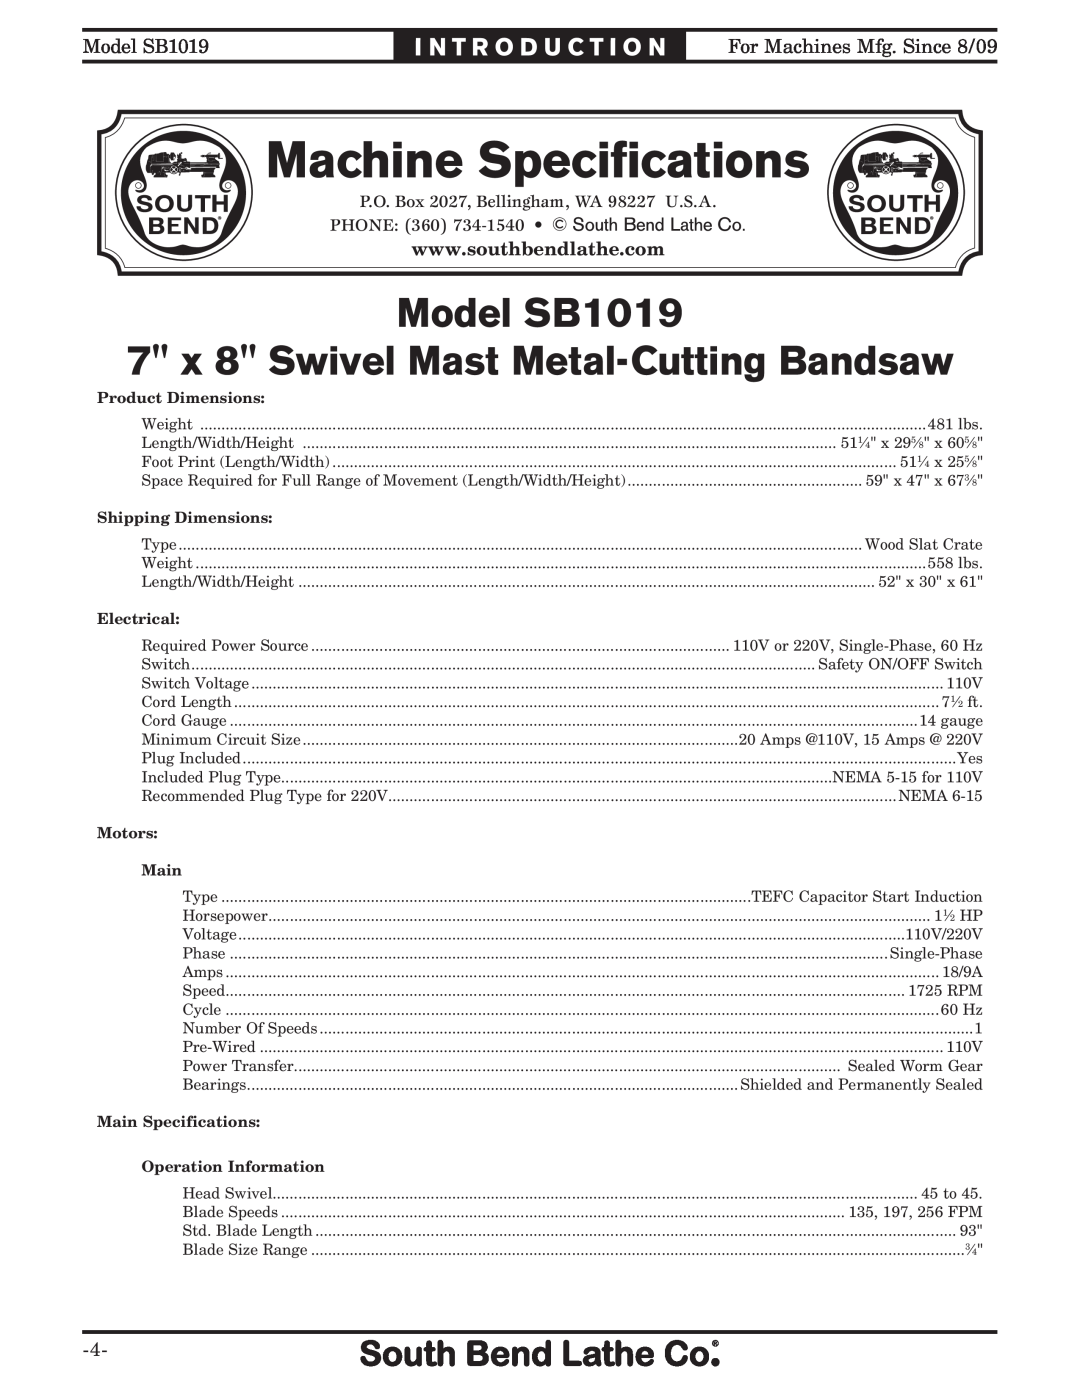 Southbend Machine Specifications, Model SB1019 7 x 8 Swivel Mast Metal-Cutting Bandsaw, I N T R O D U C T I O N, Motors 